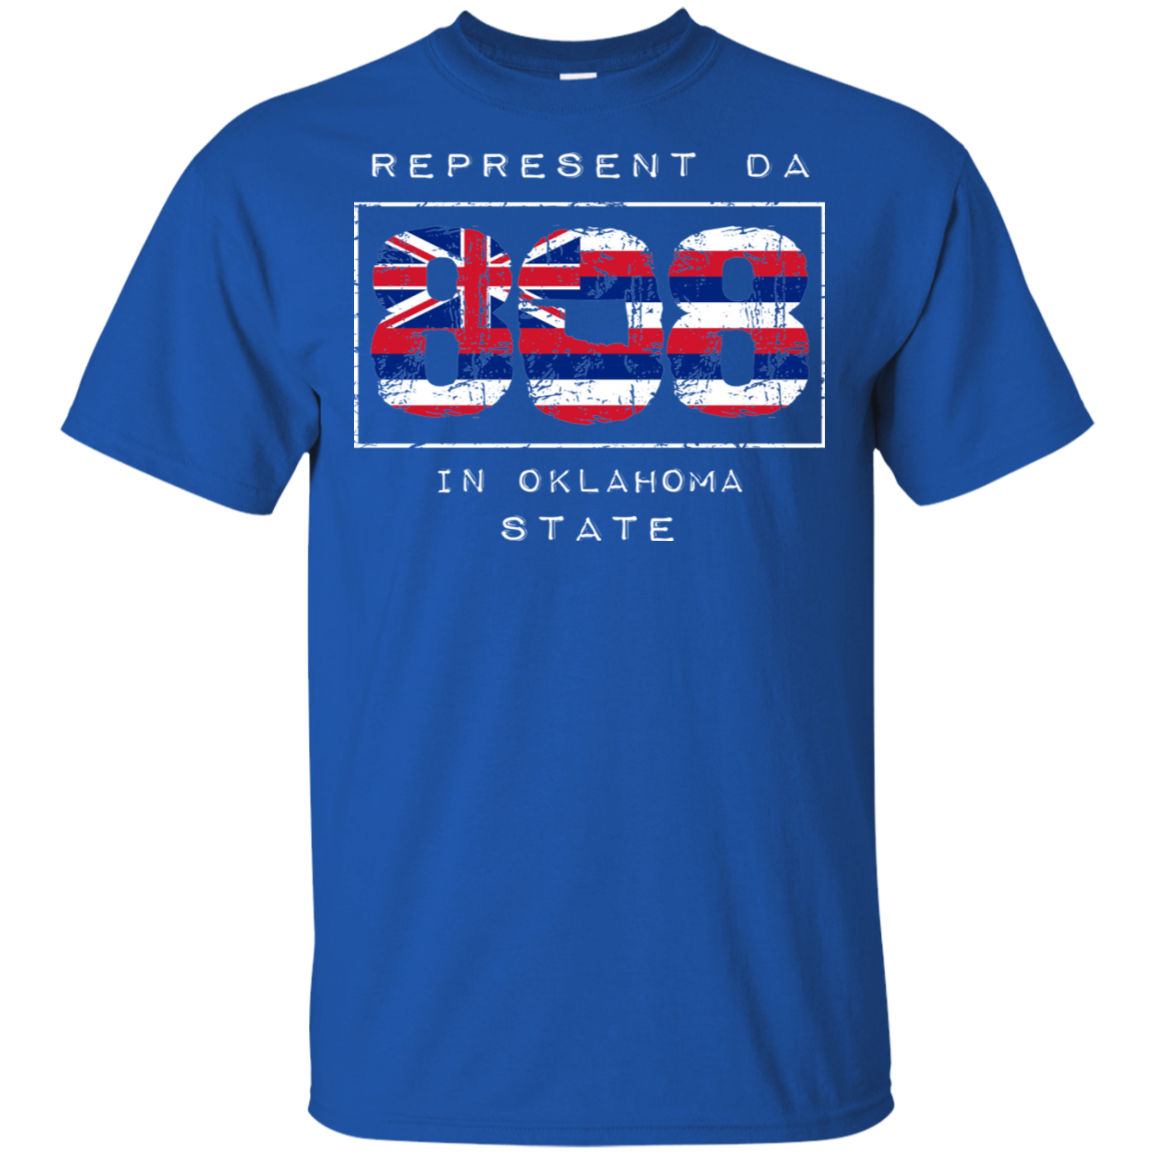 Rep Da 808 In Oklahoma State Ultra Cotton T-Shirt, T-Shirts, Hawaii Nei All Day